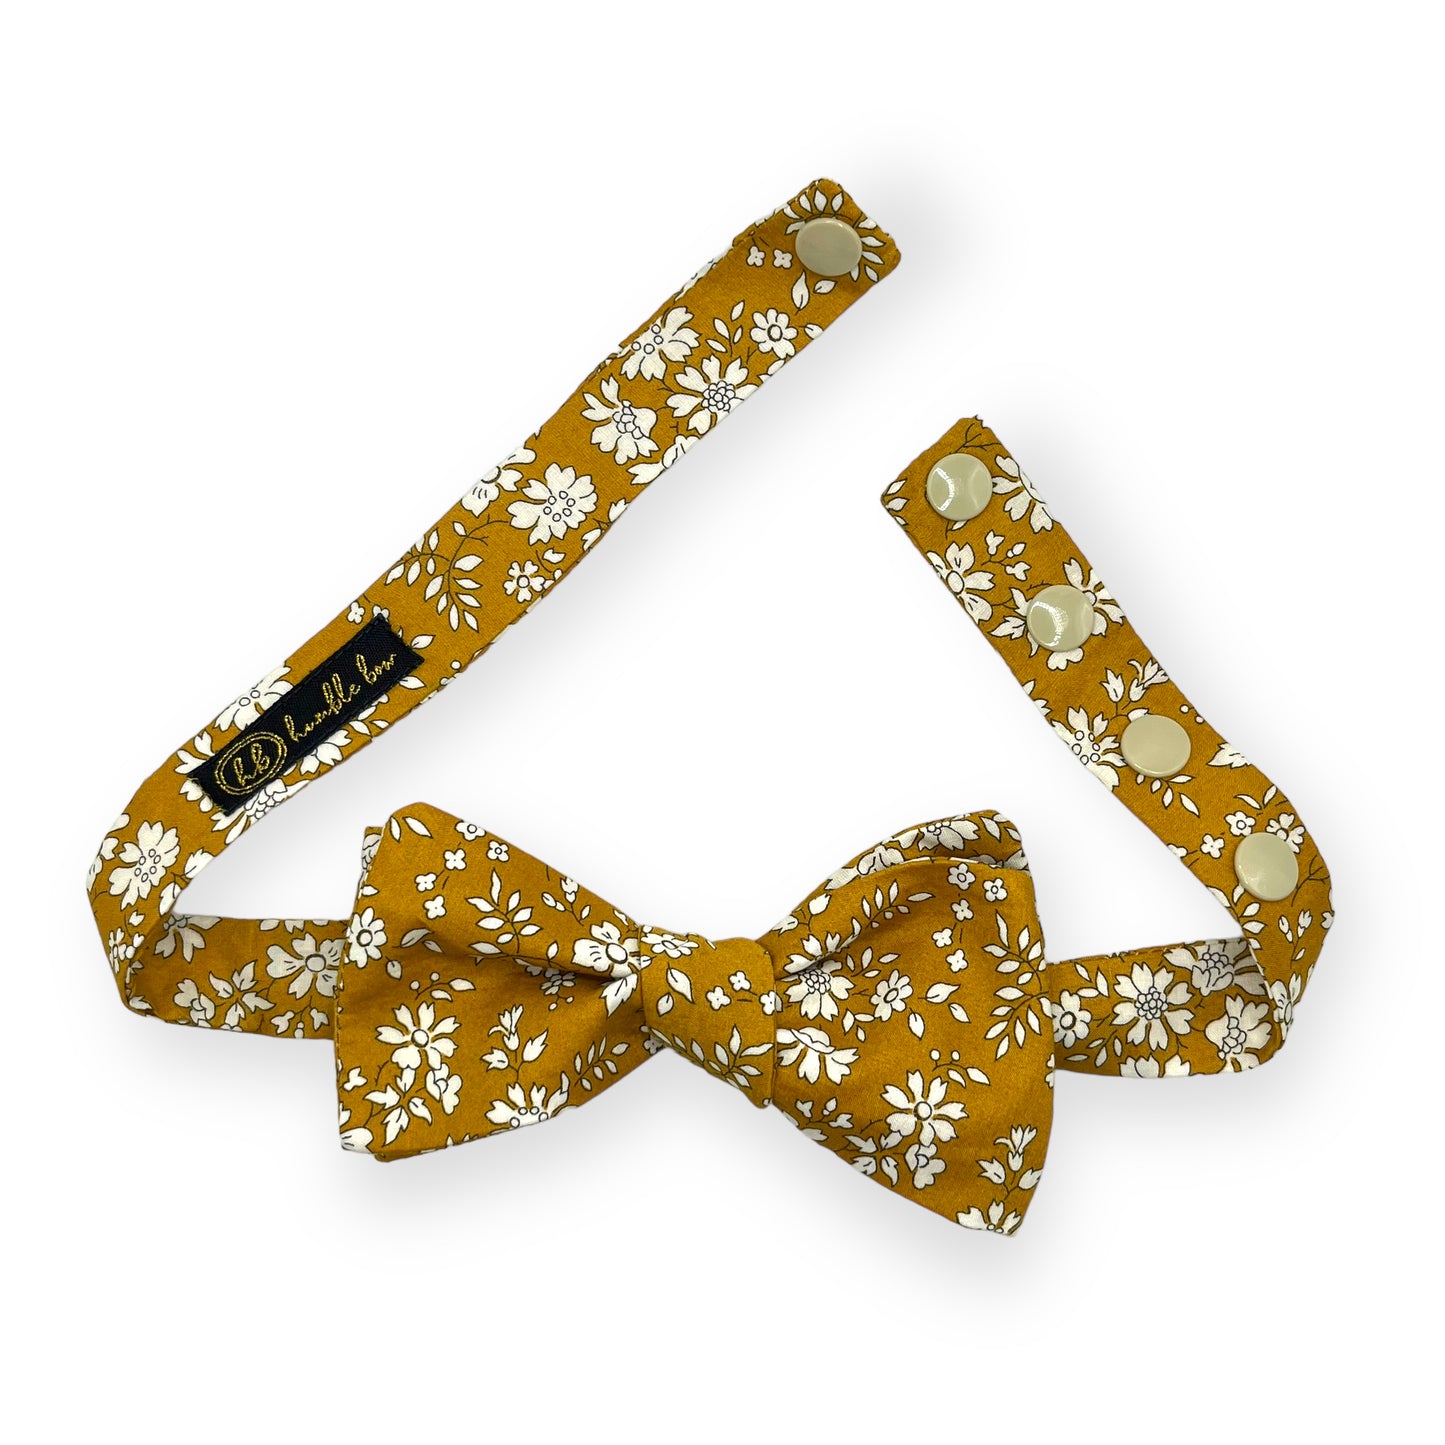 Bow Tie & Cufflinks Matching Set - Liberty Capel Gold